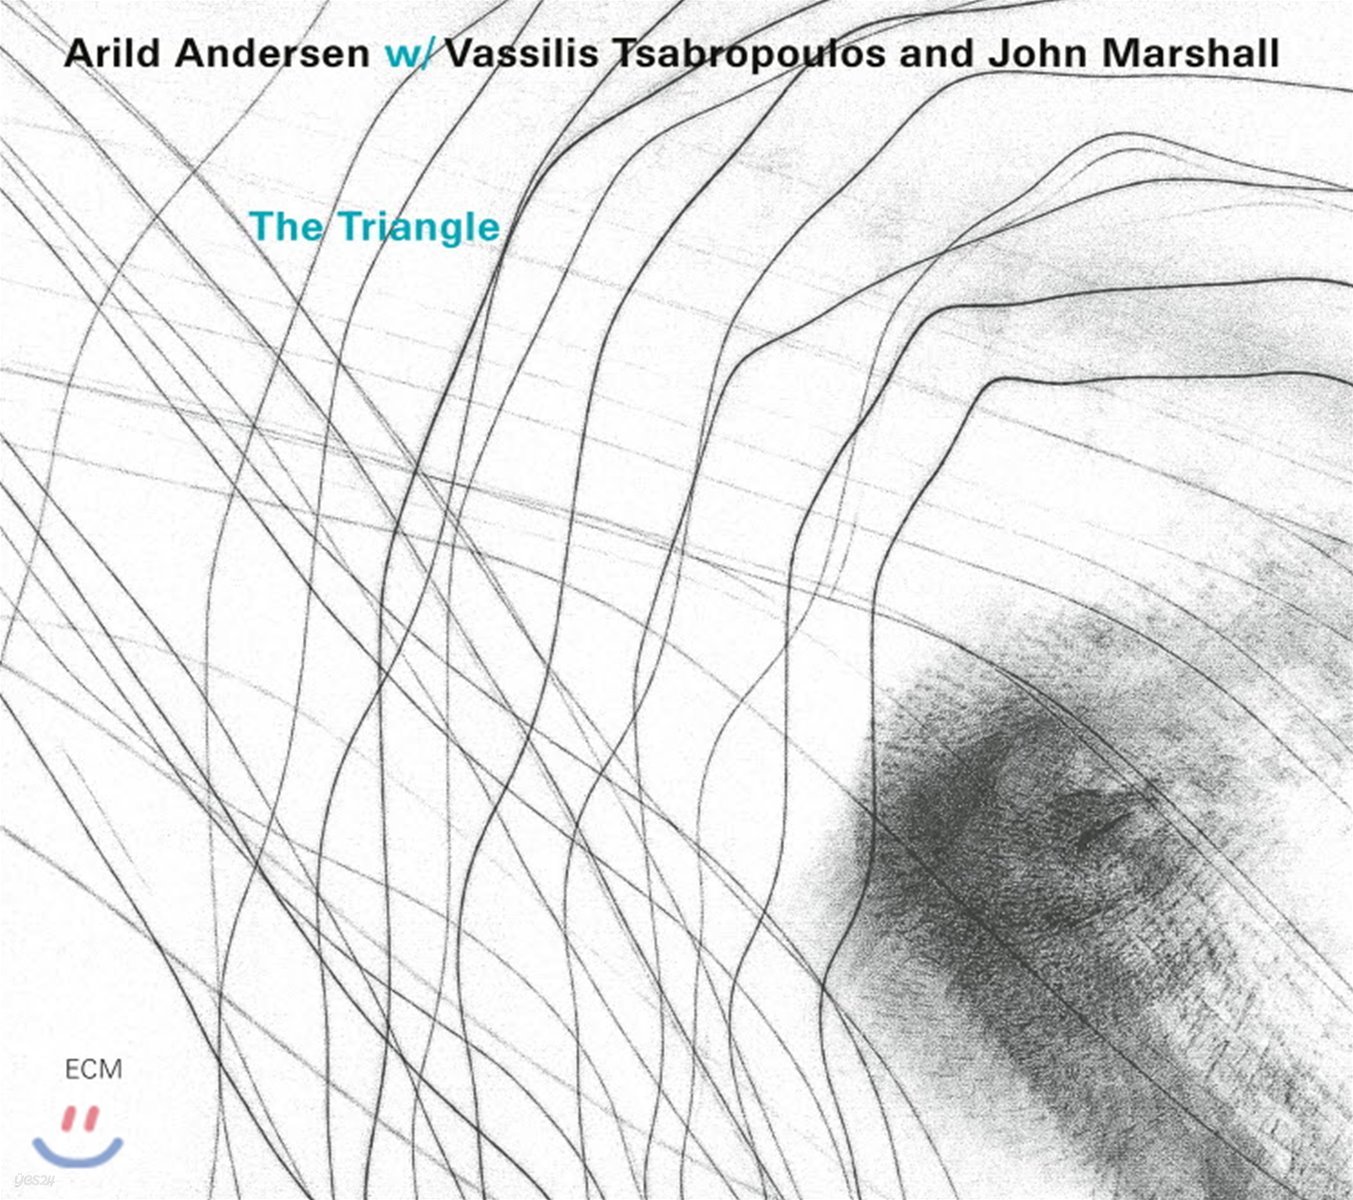 Arild Andersen/Vassilis Tsabropoulos/John Marshall - The Triangle